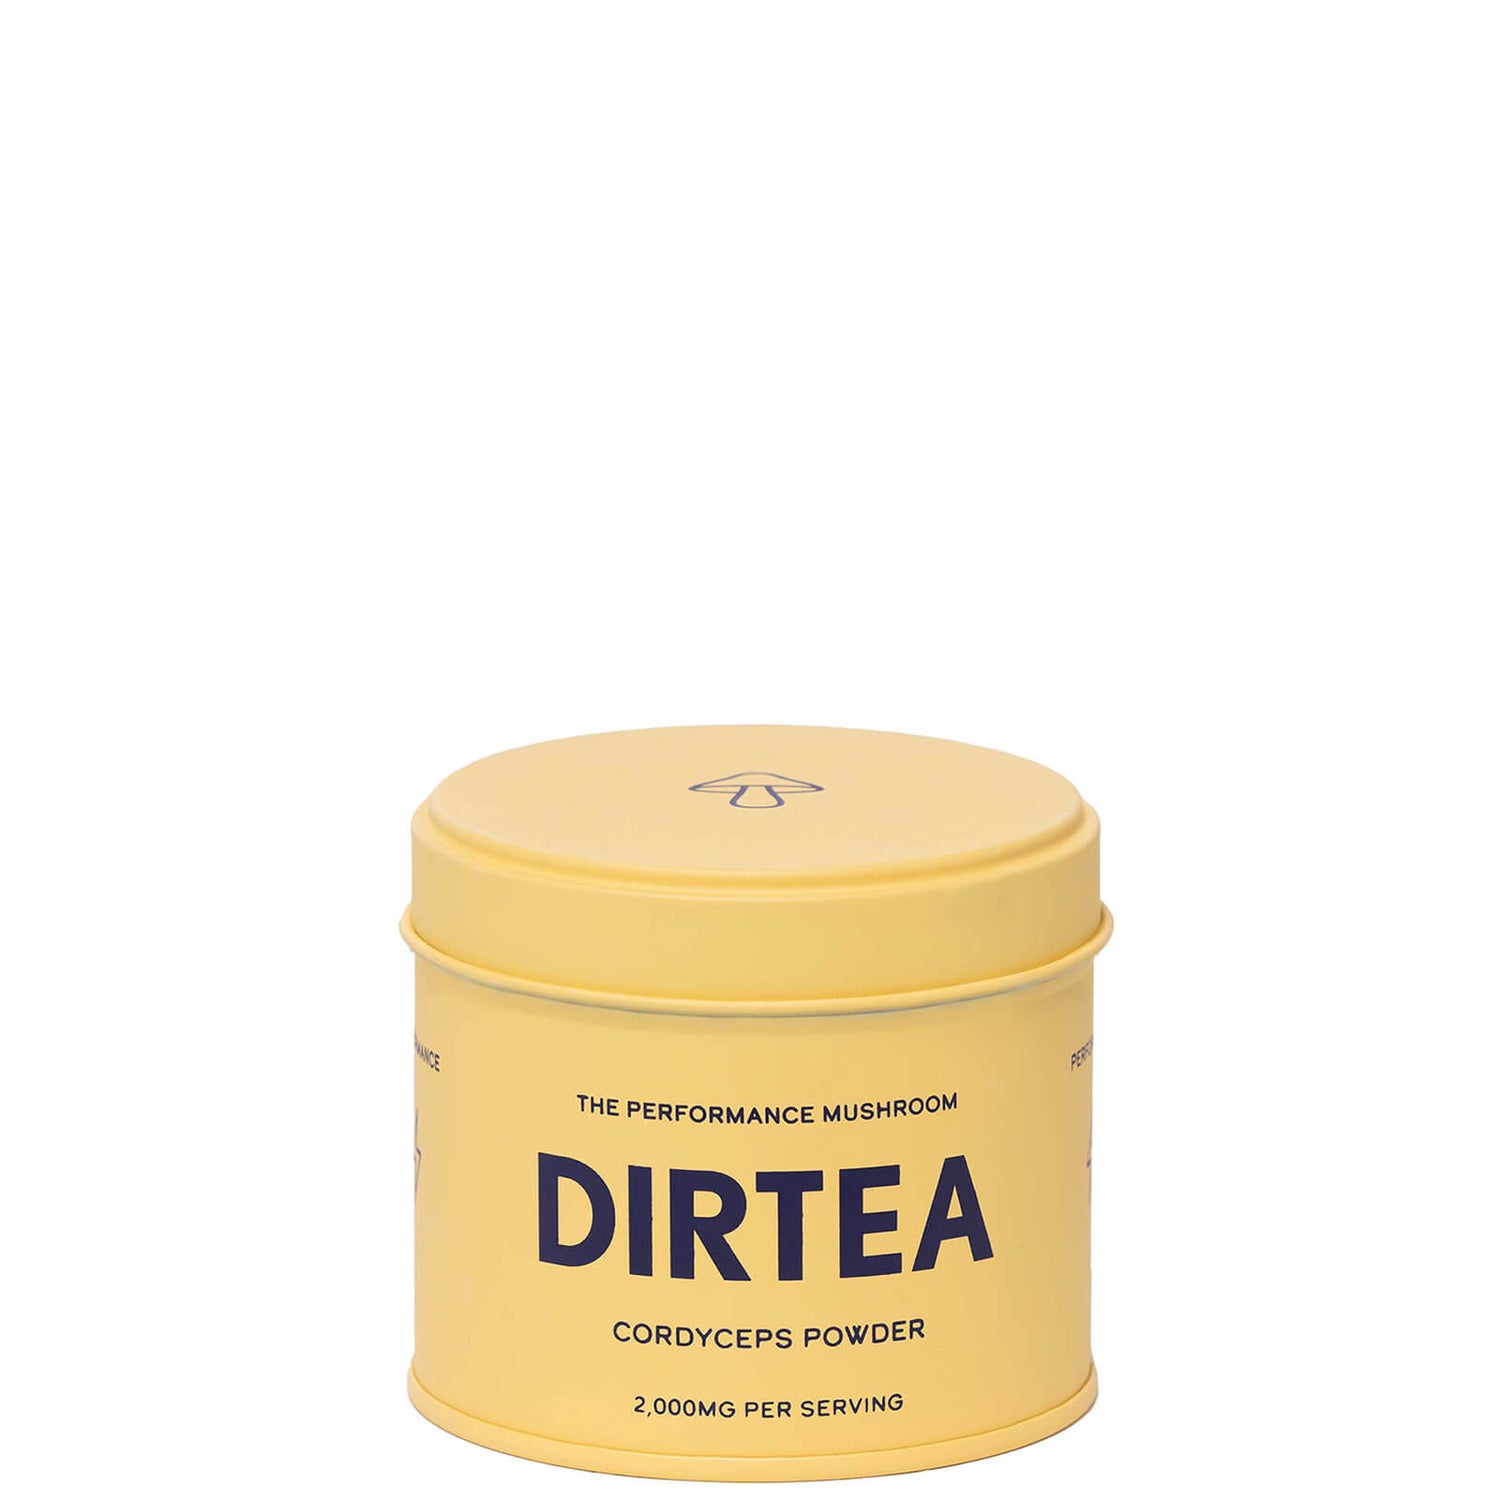 DIRTEA Cordyceps Powder - The Performance Mushroom 60g